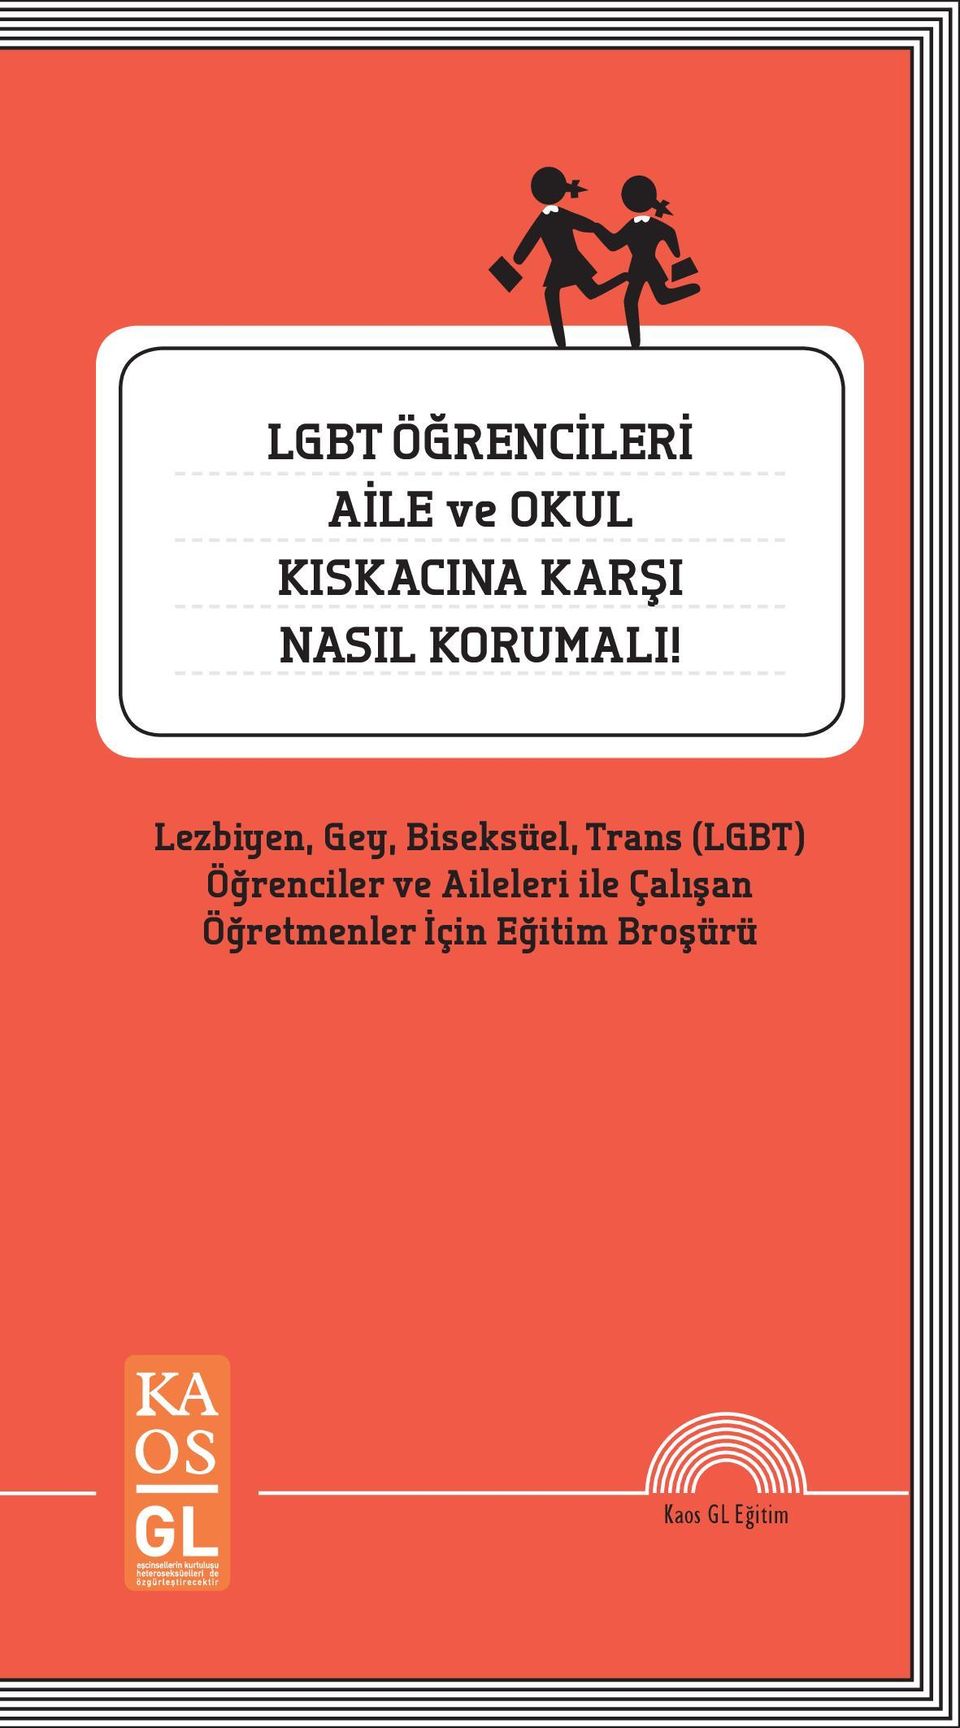 Lezbiyen, Gey, Biseksüel, Trans (LGBT)